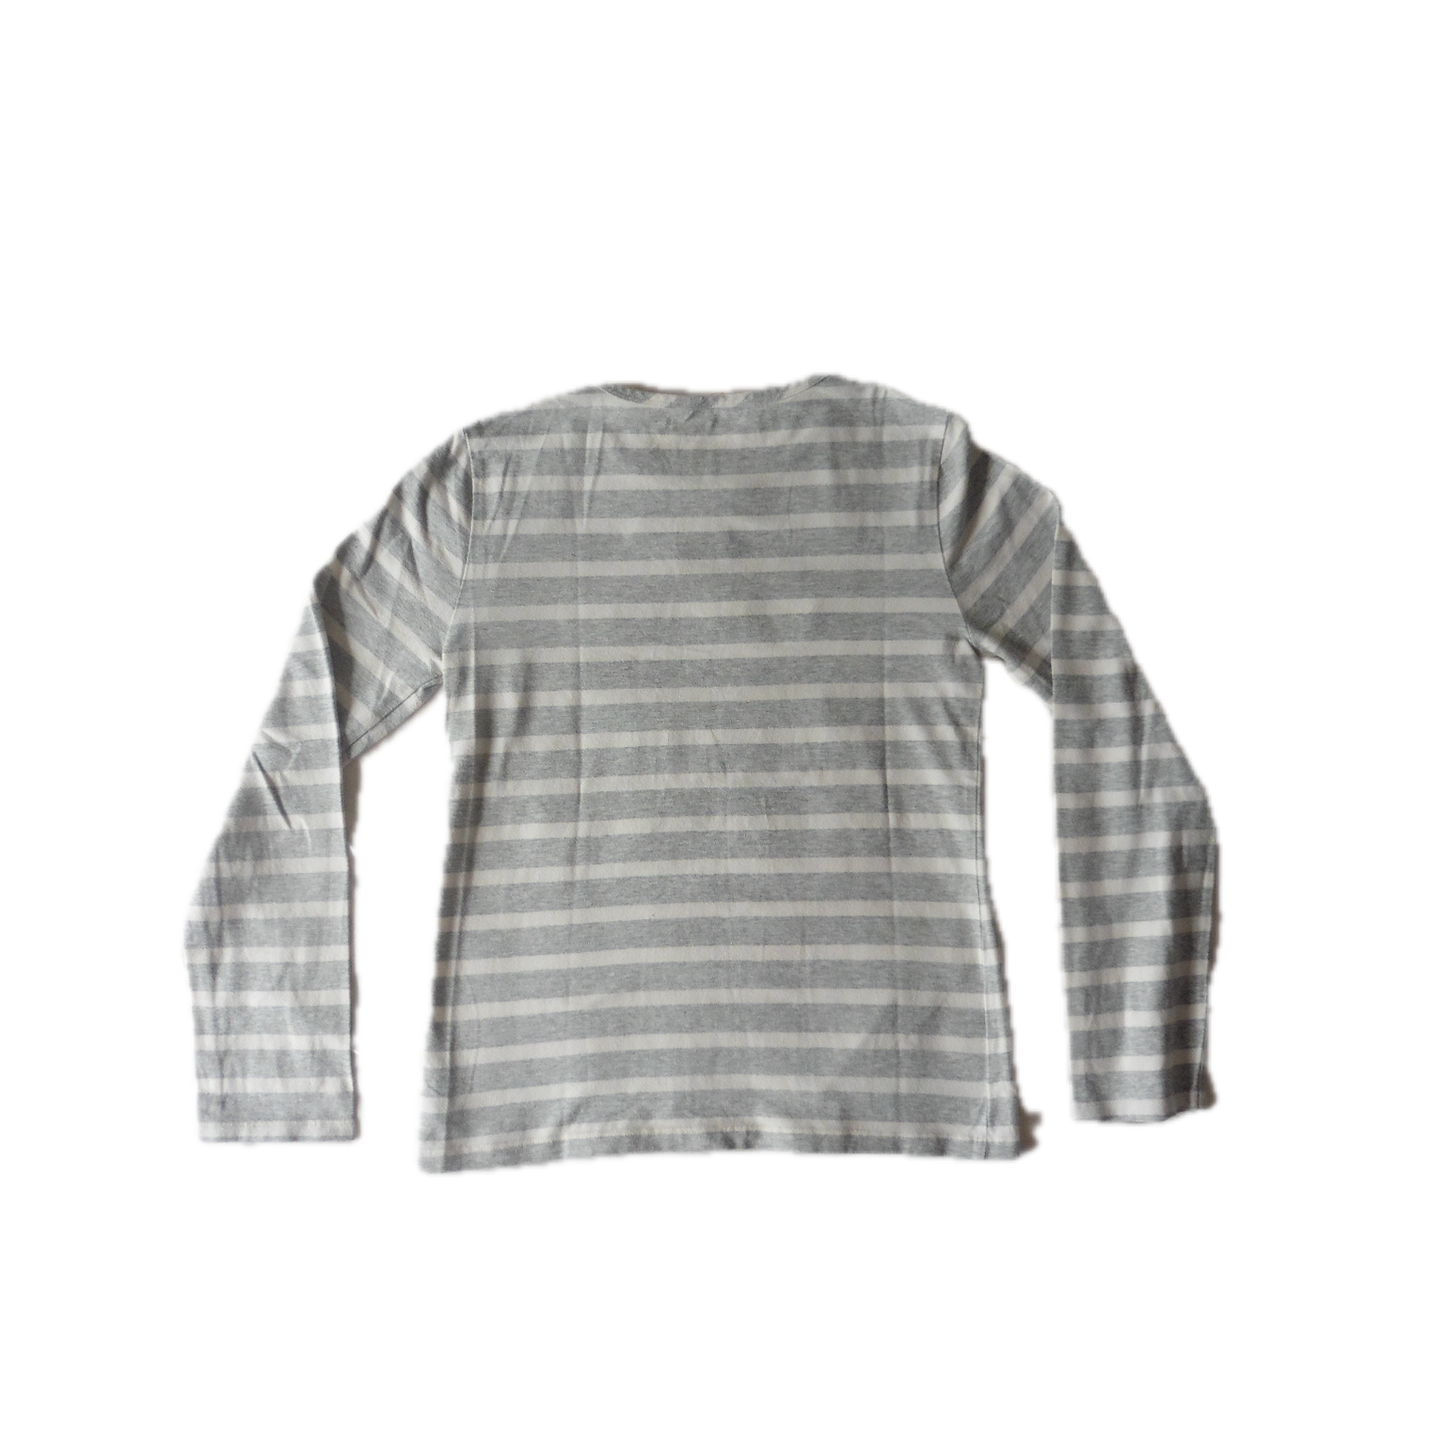 John Lewis Long Sleeve Top grey/white stripe 11y